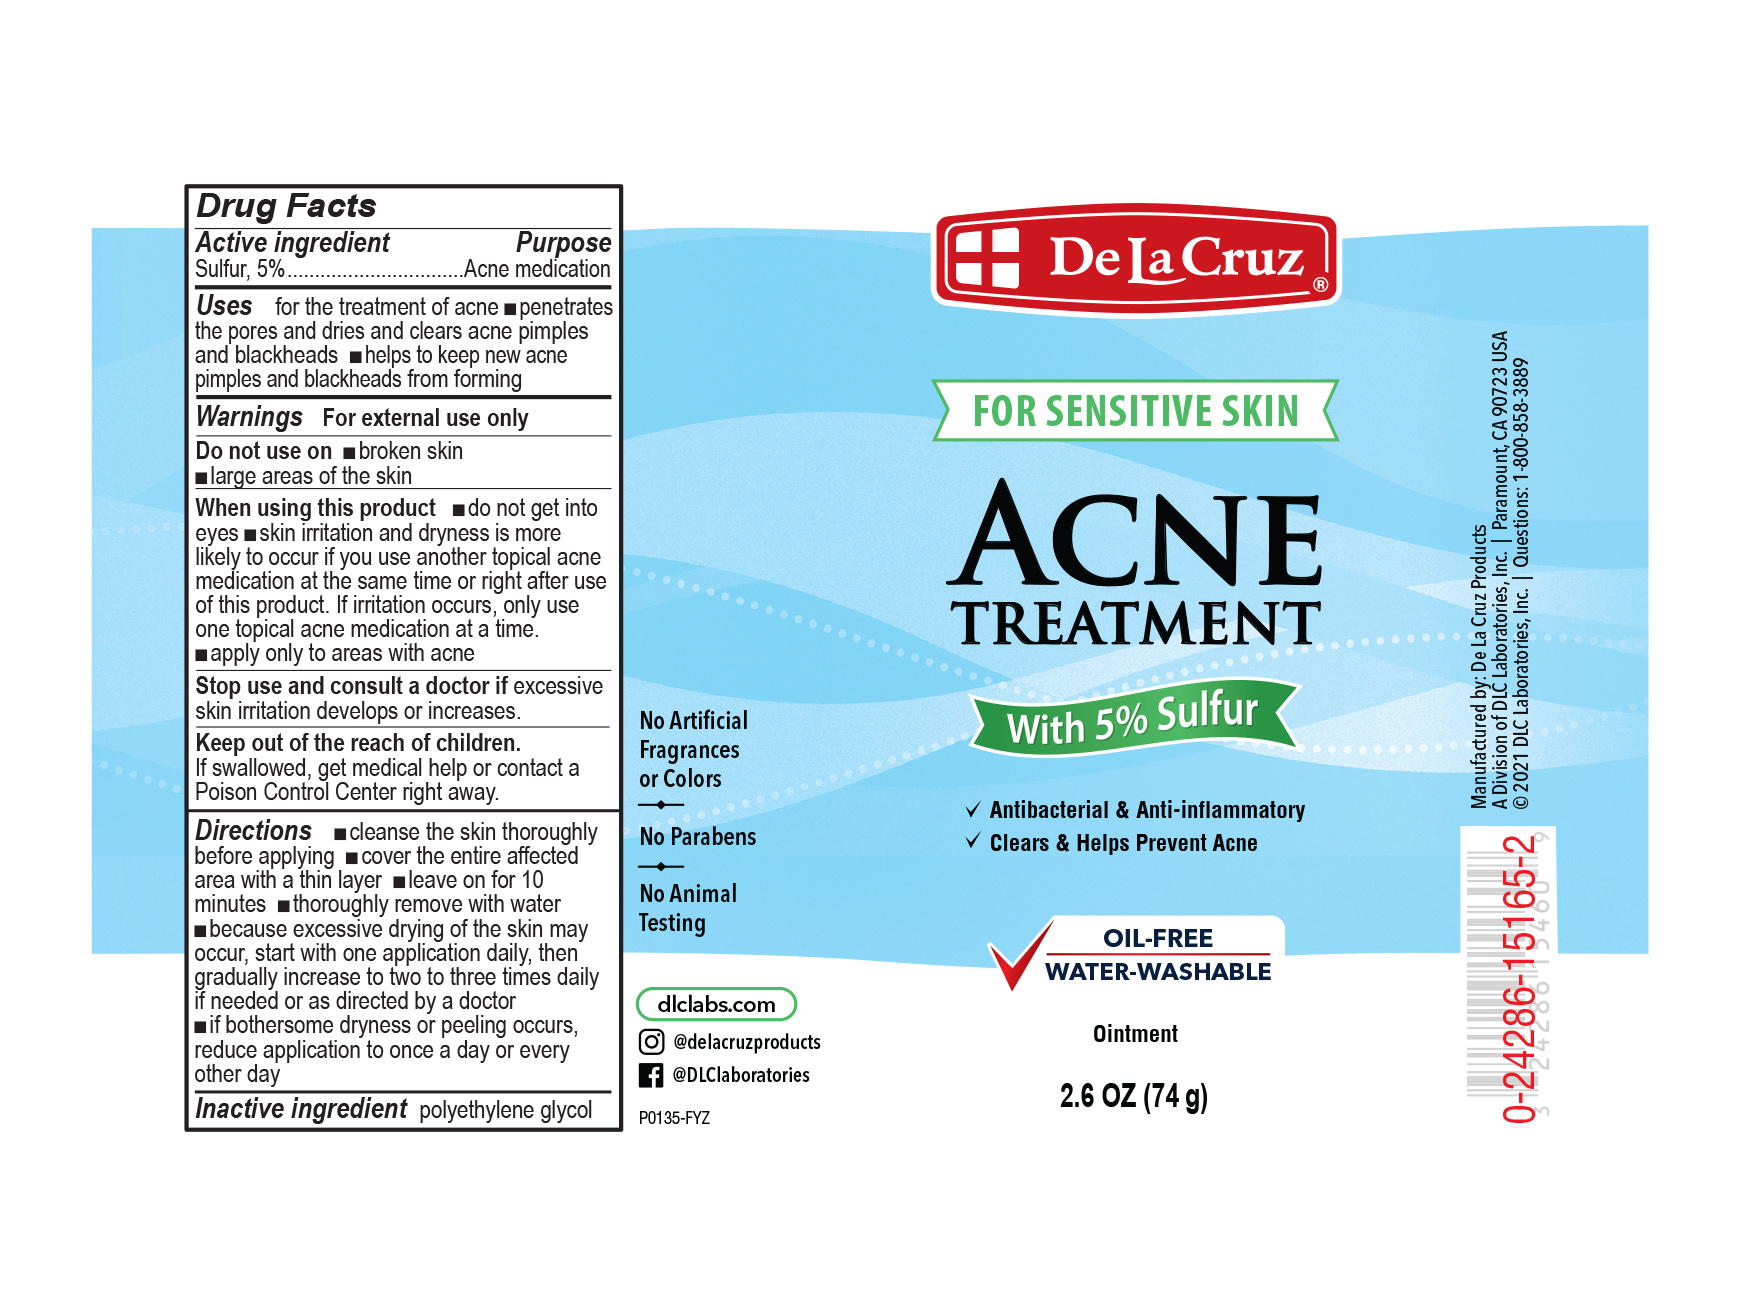 Acne treatment 5% sulfur